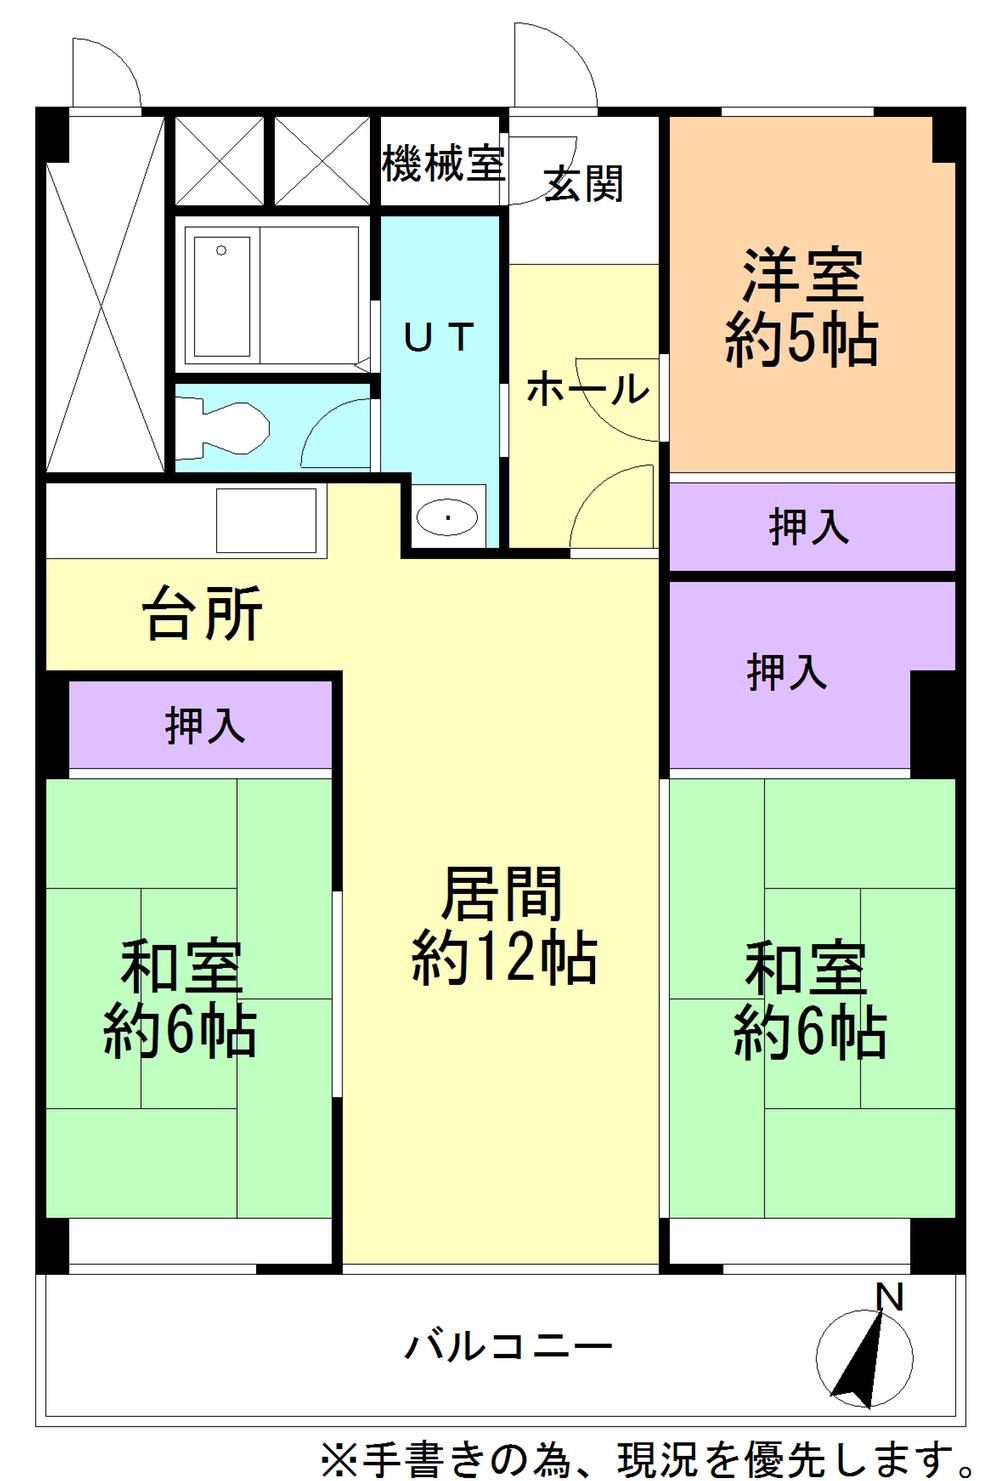 Floor plan. 3LDK, Price 11.5 million yen, Occupied area 85.61 sq m , Balcony area 5.81 sq m